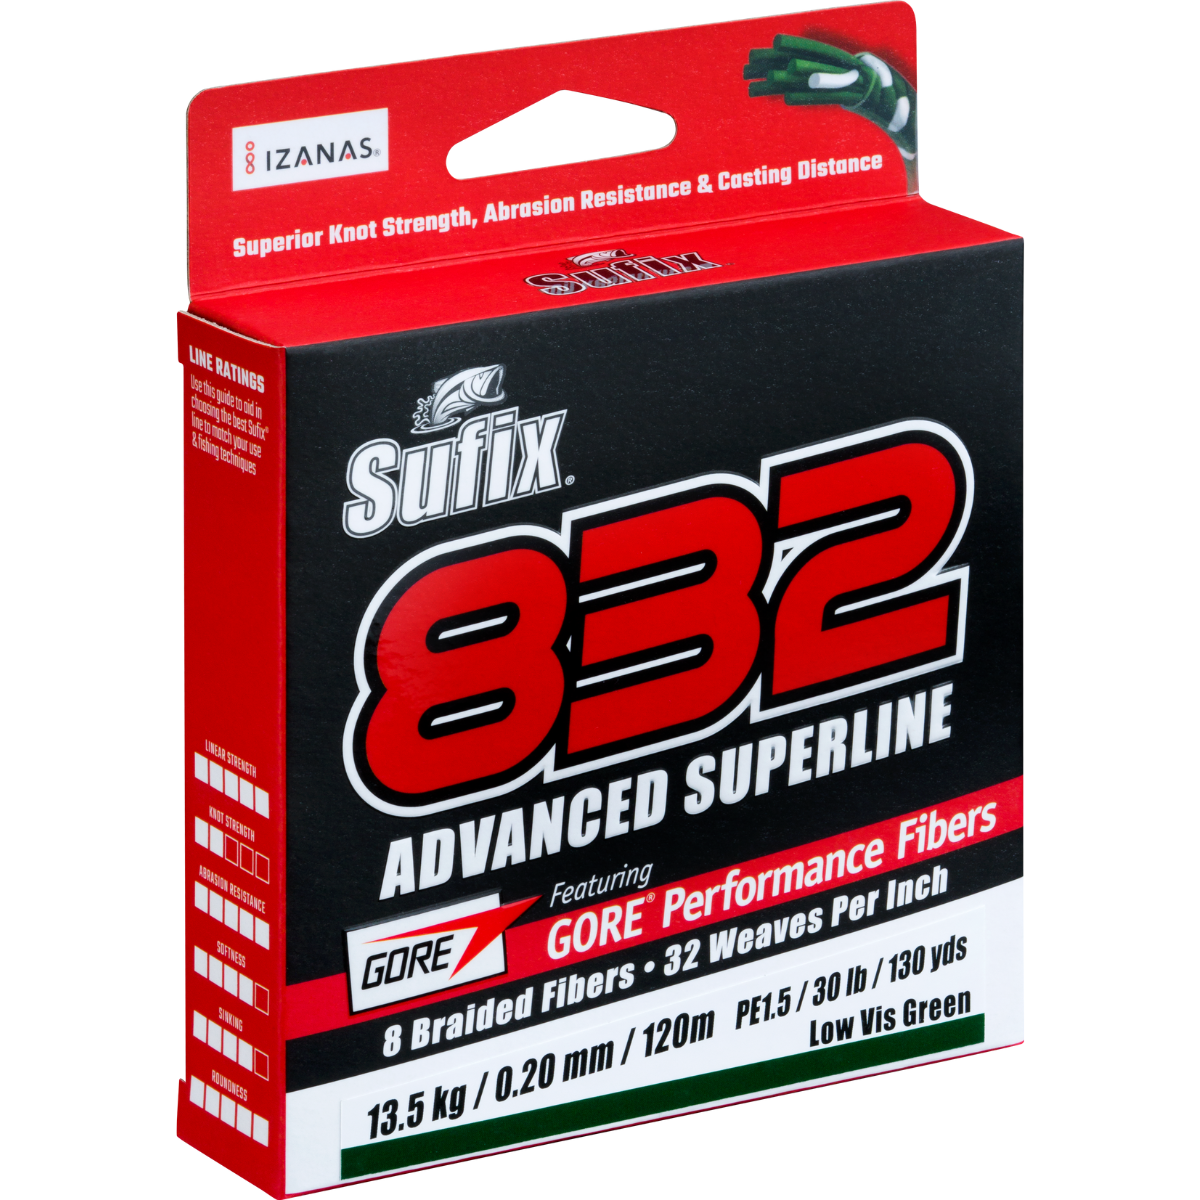 Sufix 832 Advanced Superline®, advanced superline 